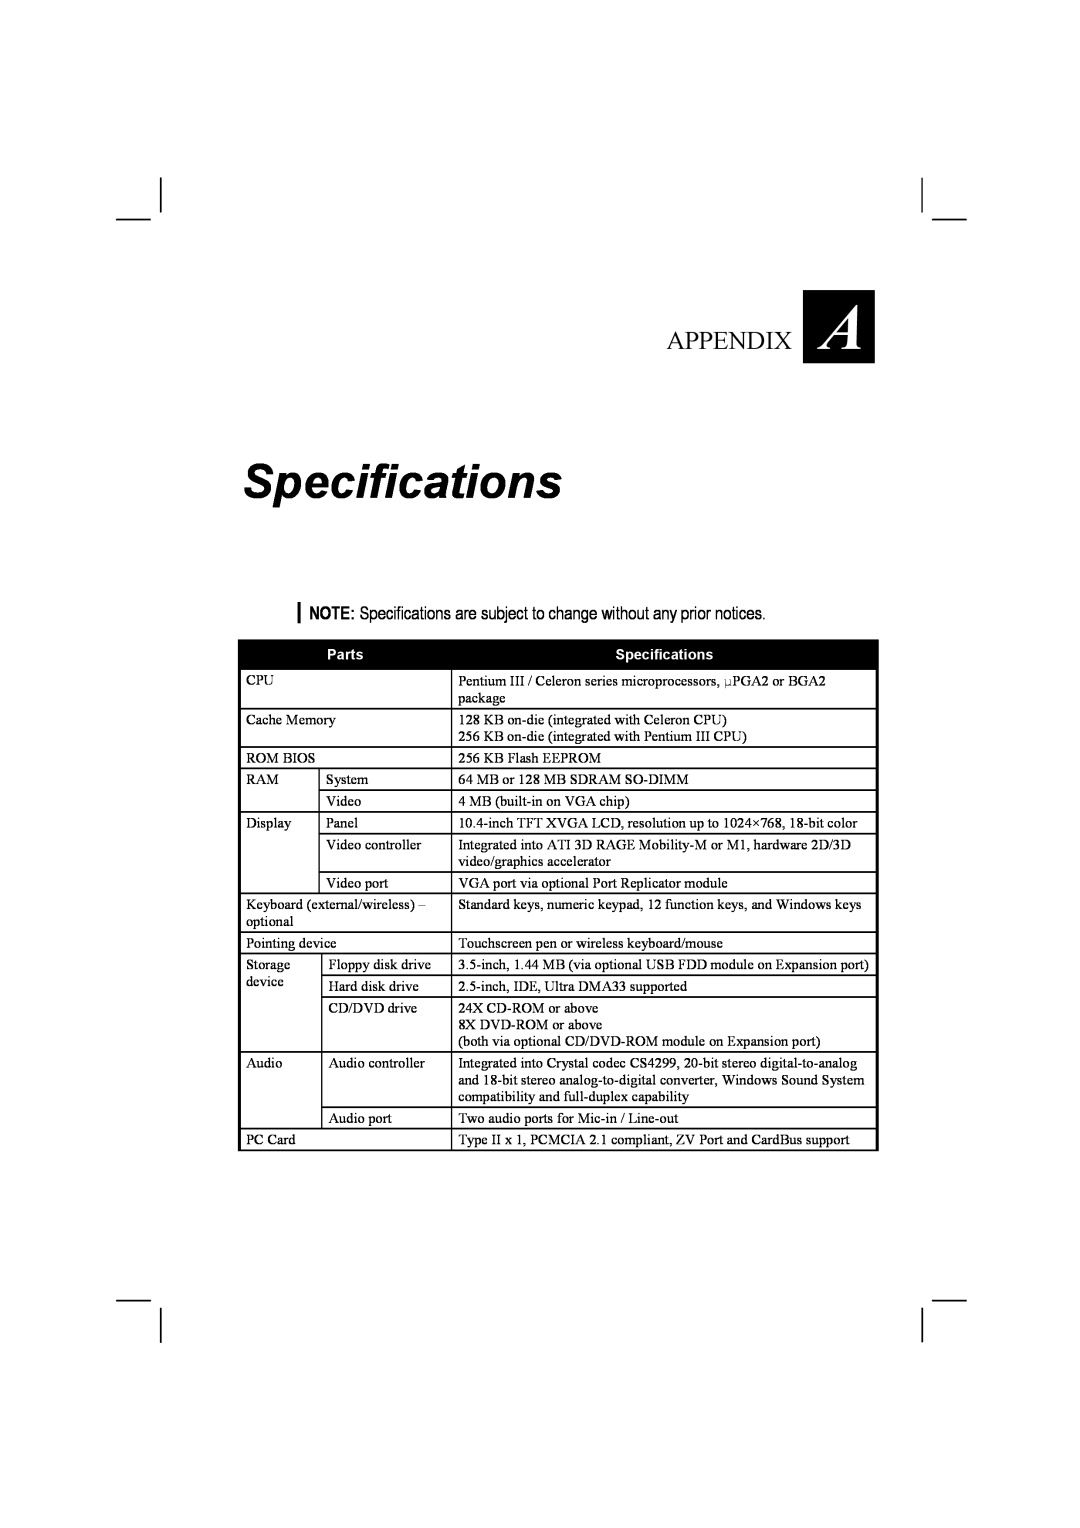 TAG 10 manual Specifications, Appendix, Parts 